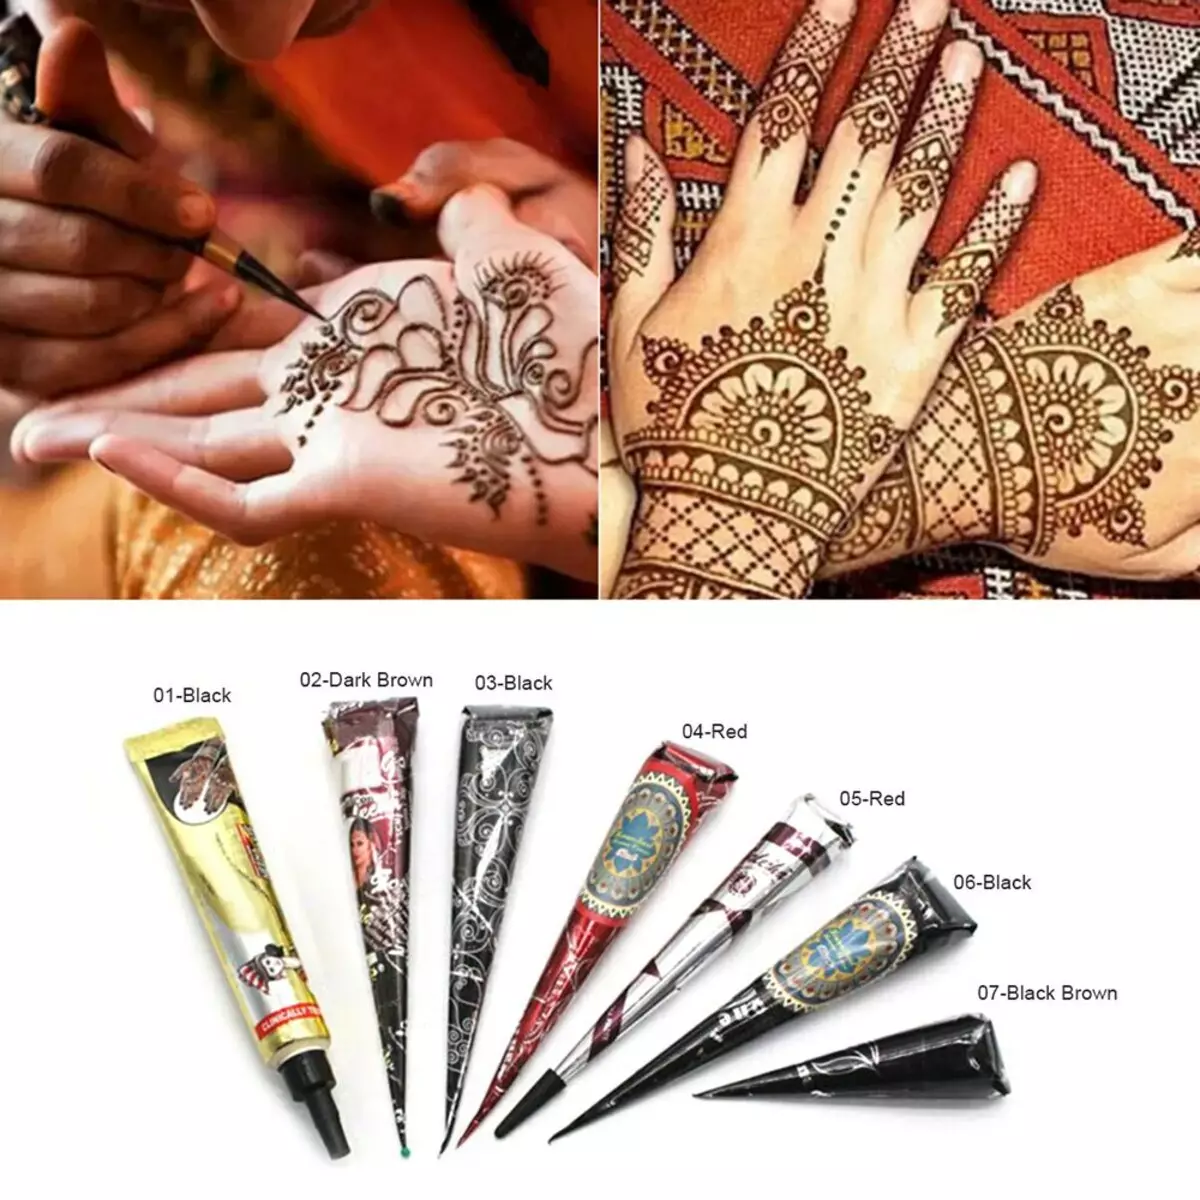 Biotate: Apa itu dan berapa banyak tatu henna dan berkilau? Bagaimana keadaan mereka? 291_11